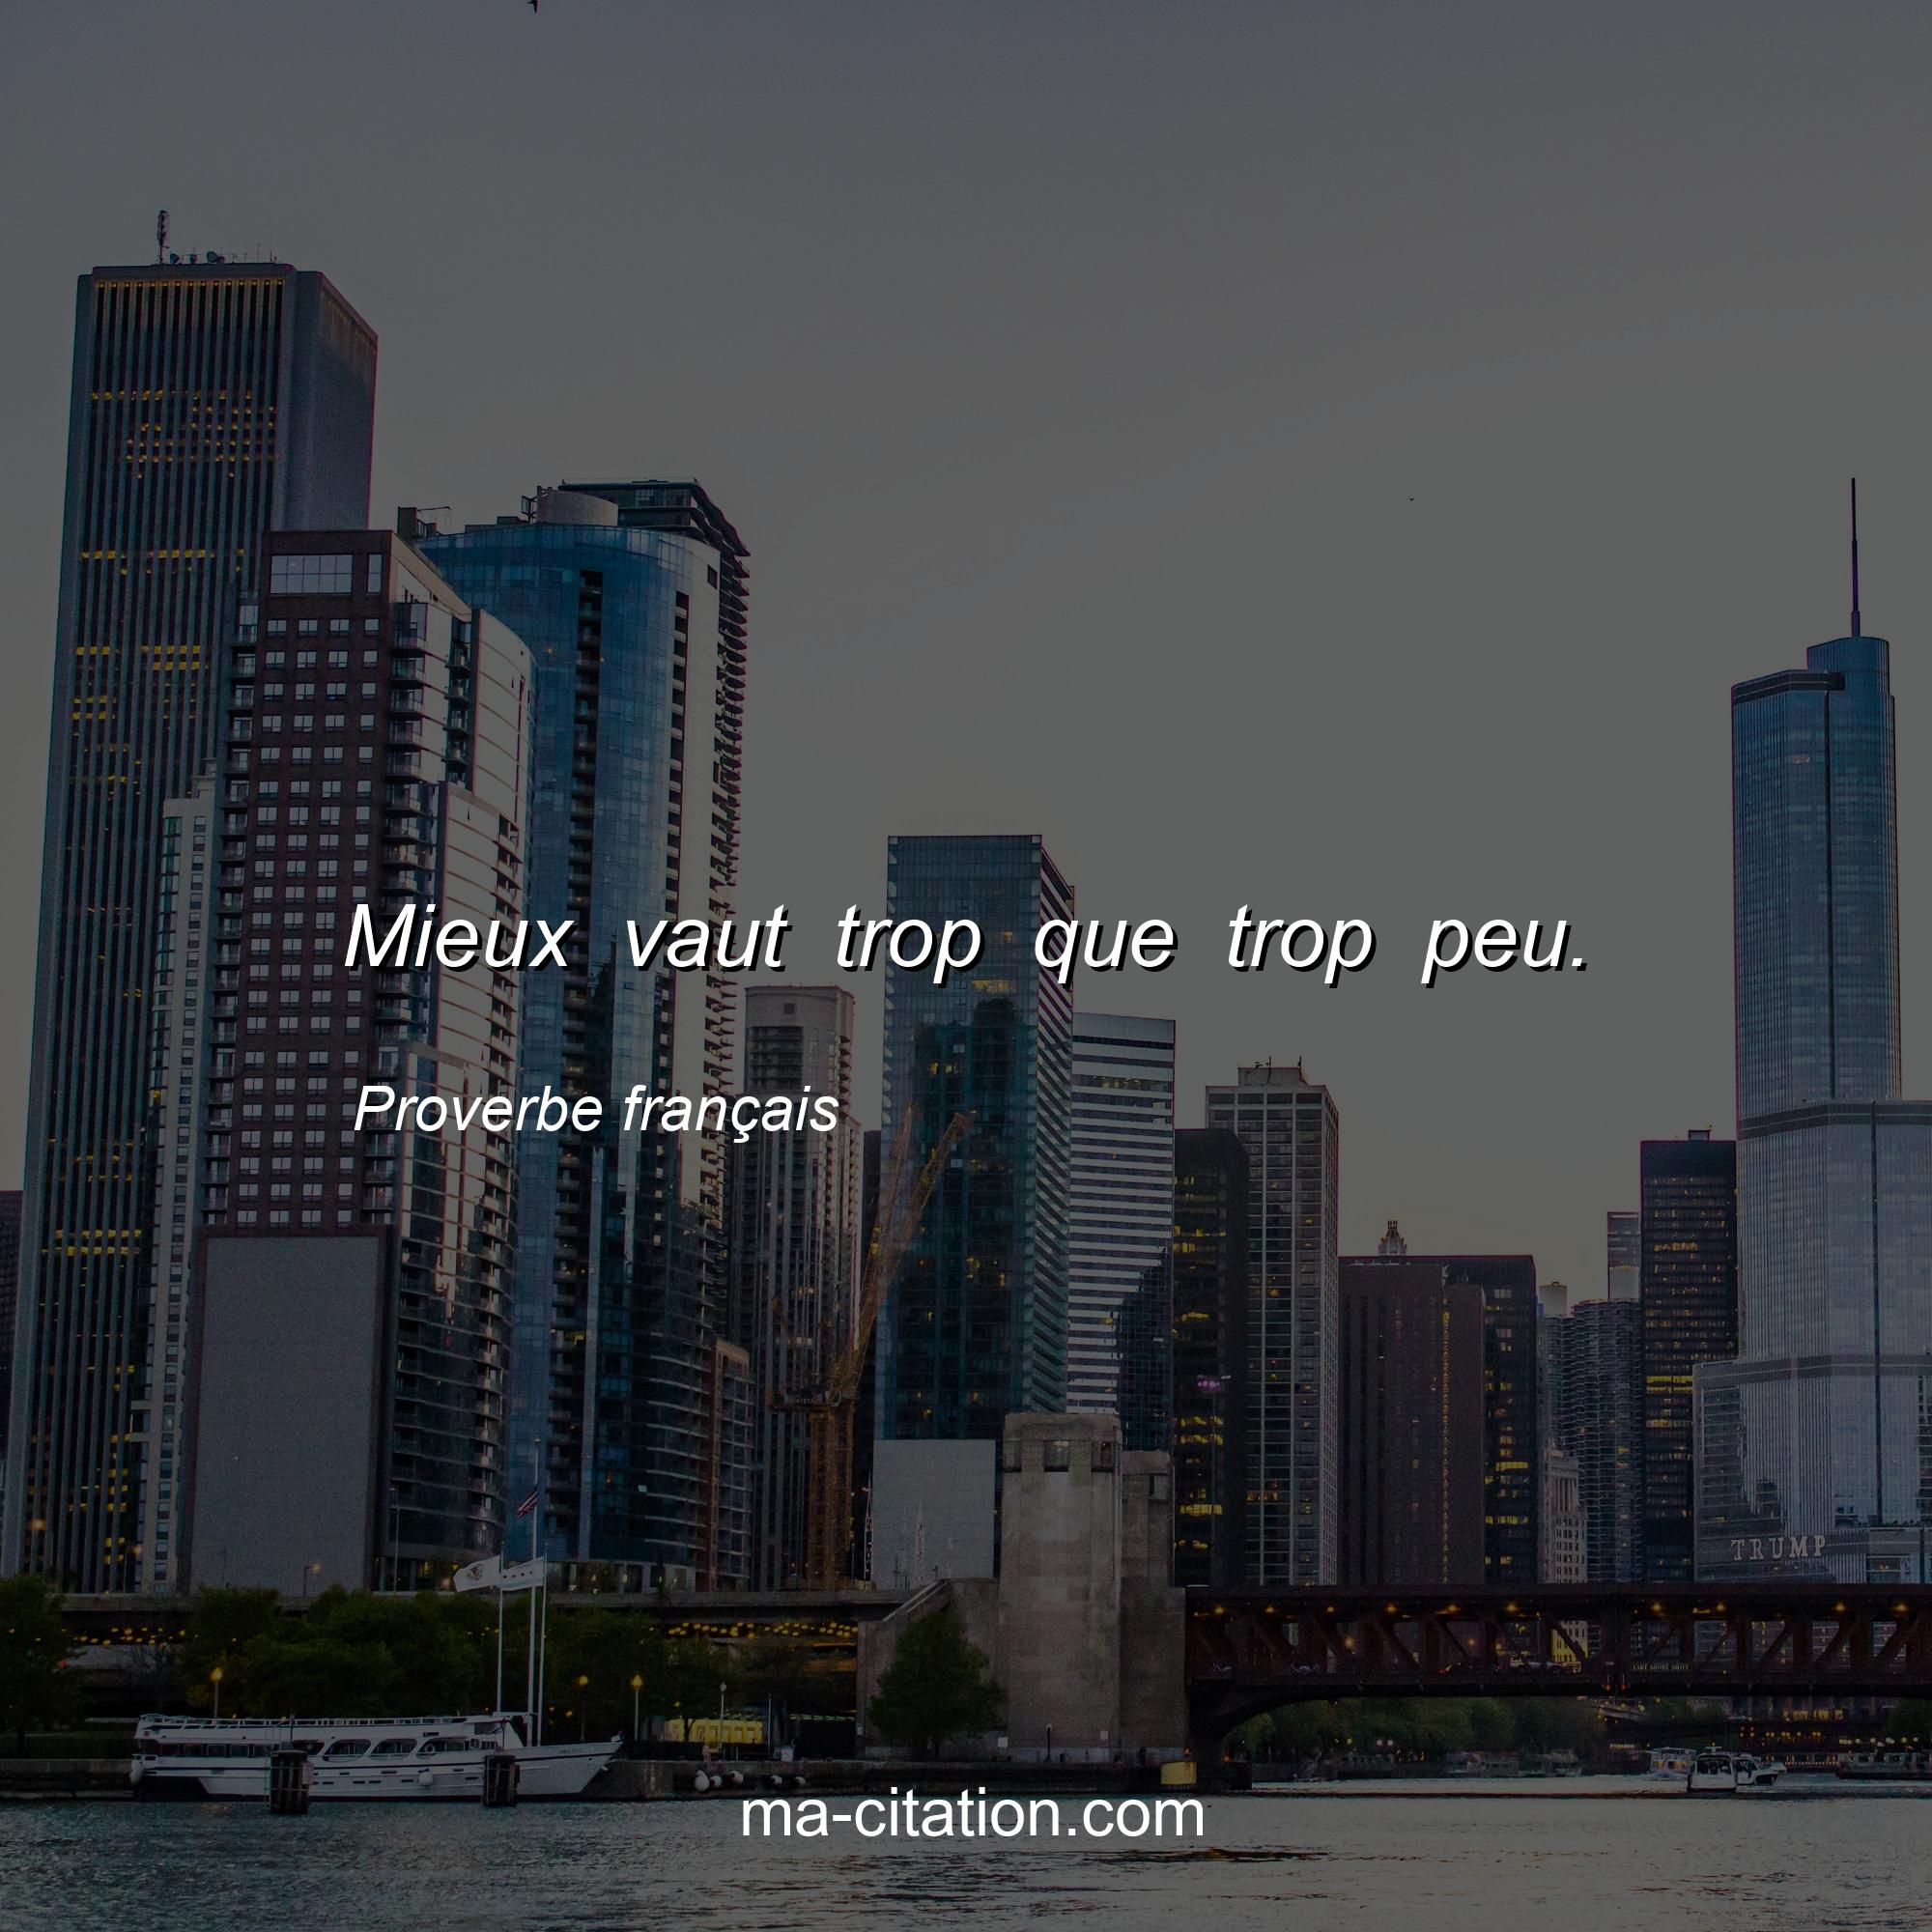 Proverbe français : Mieux vaut trop que trop peu.